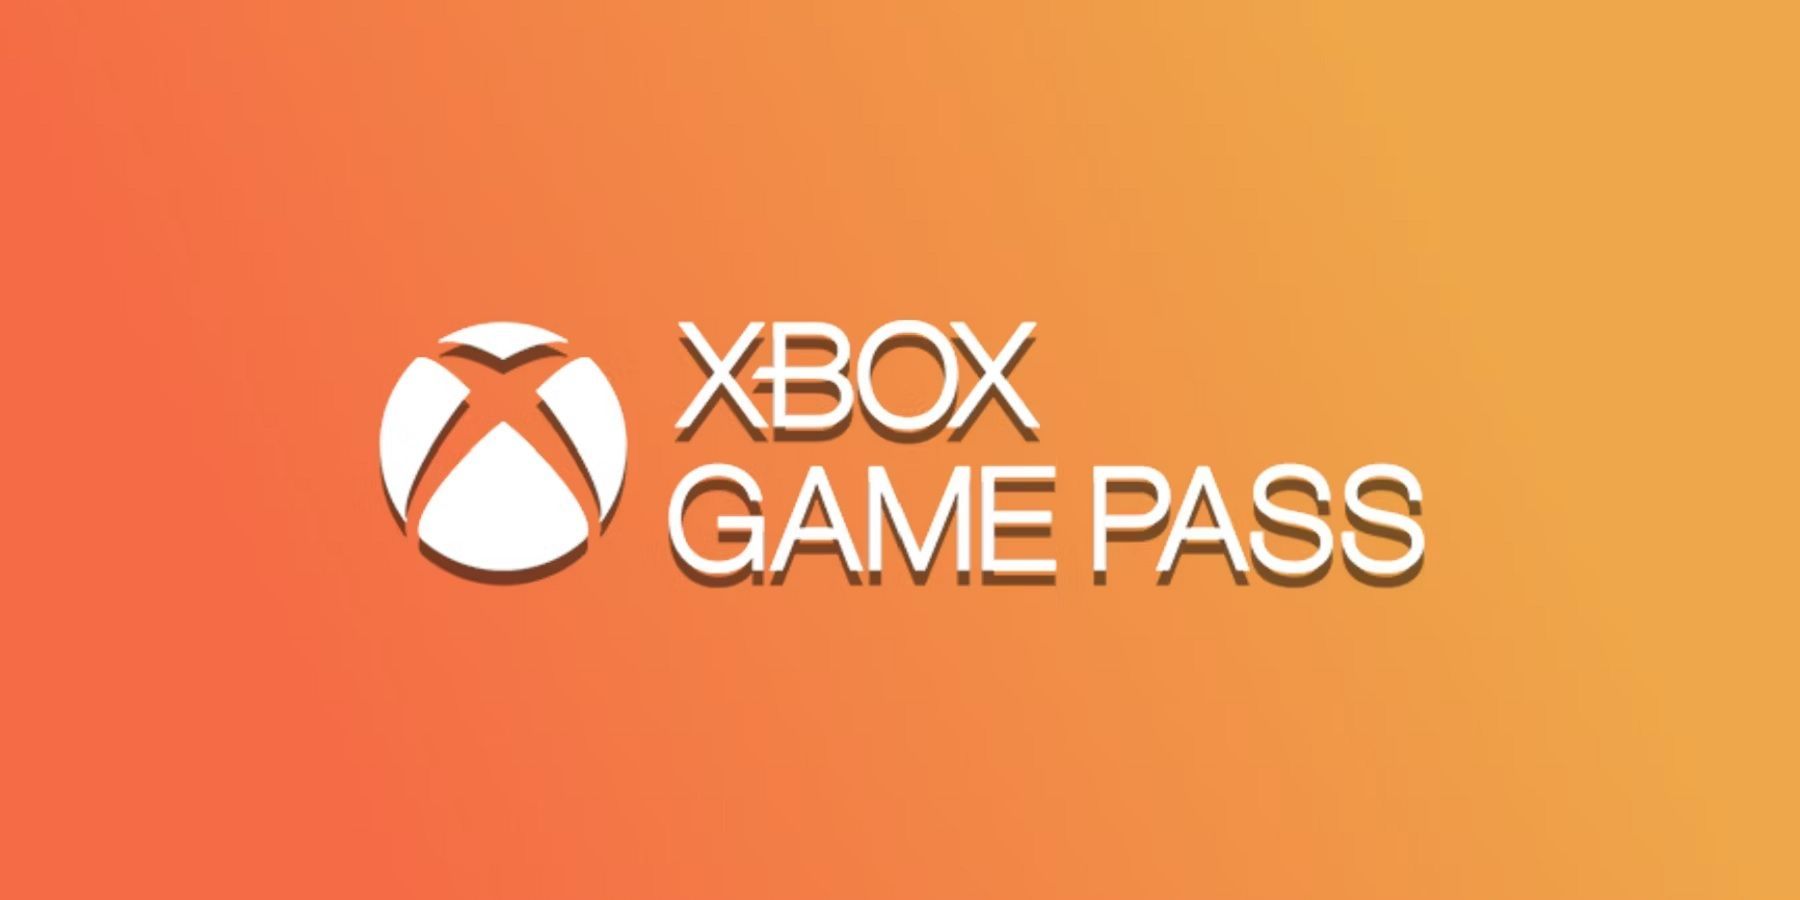 xbox-game-pass-logo-with-orange-background-1